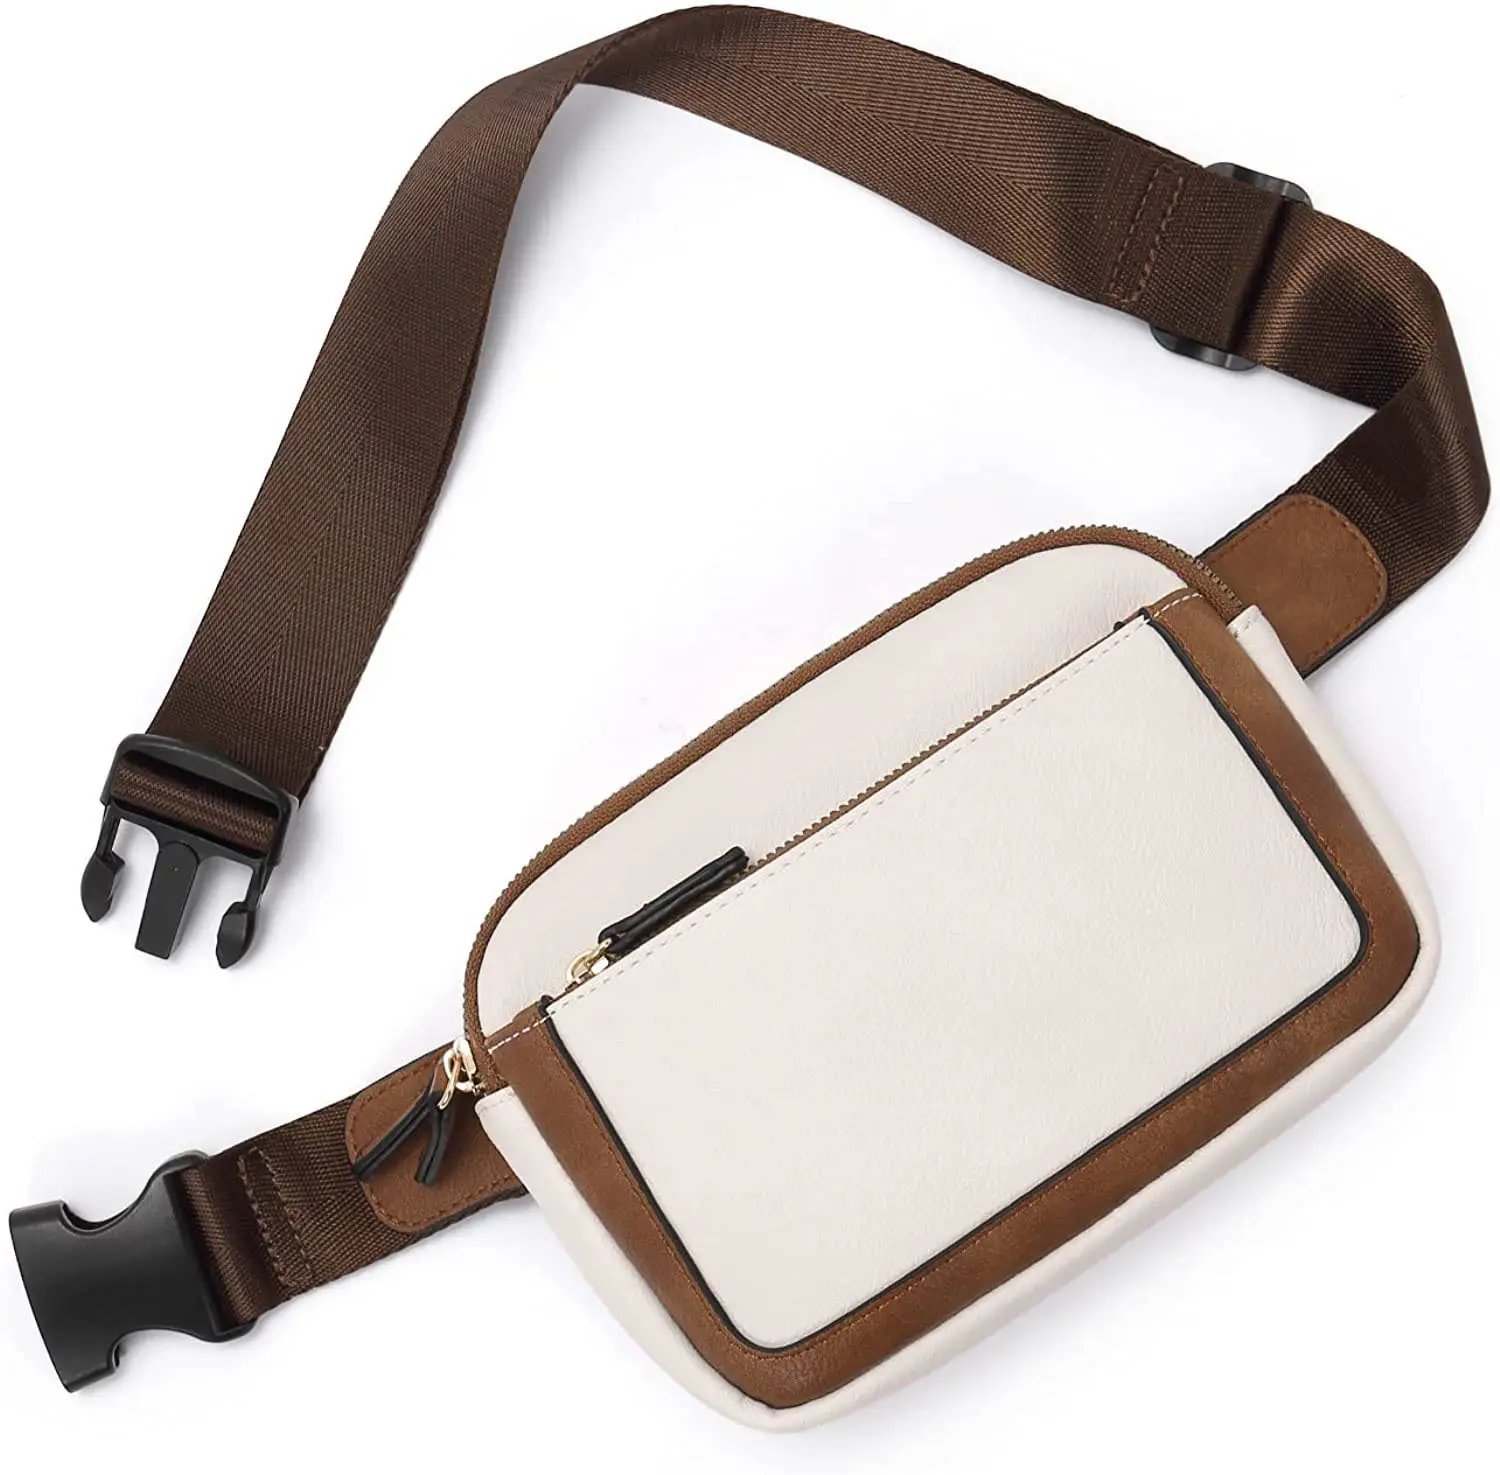 Adjustable Messenger Bag Shoulder Strap Leather Fancy Hand Bags Pouch Waist Bag For Women Ladies